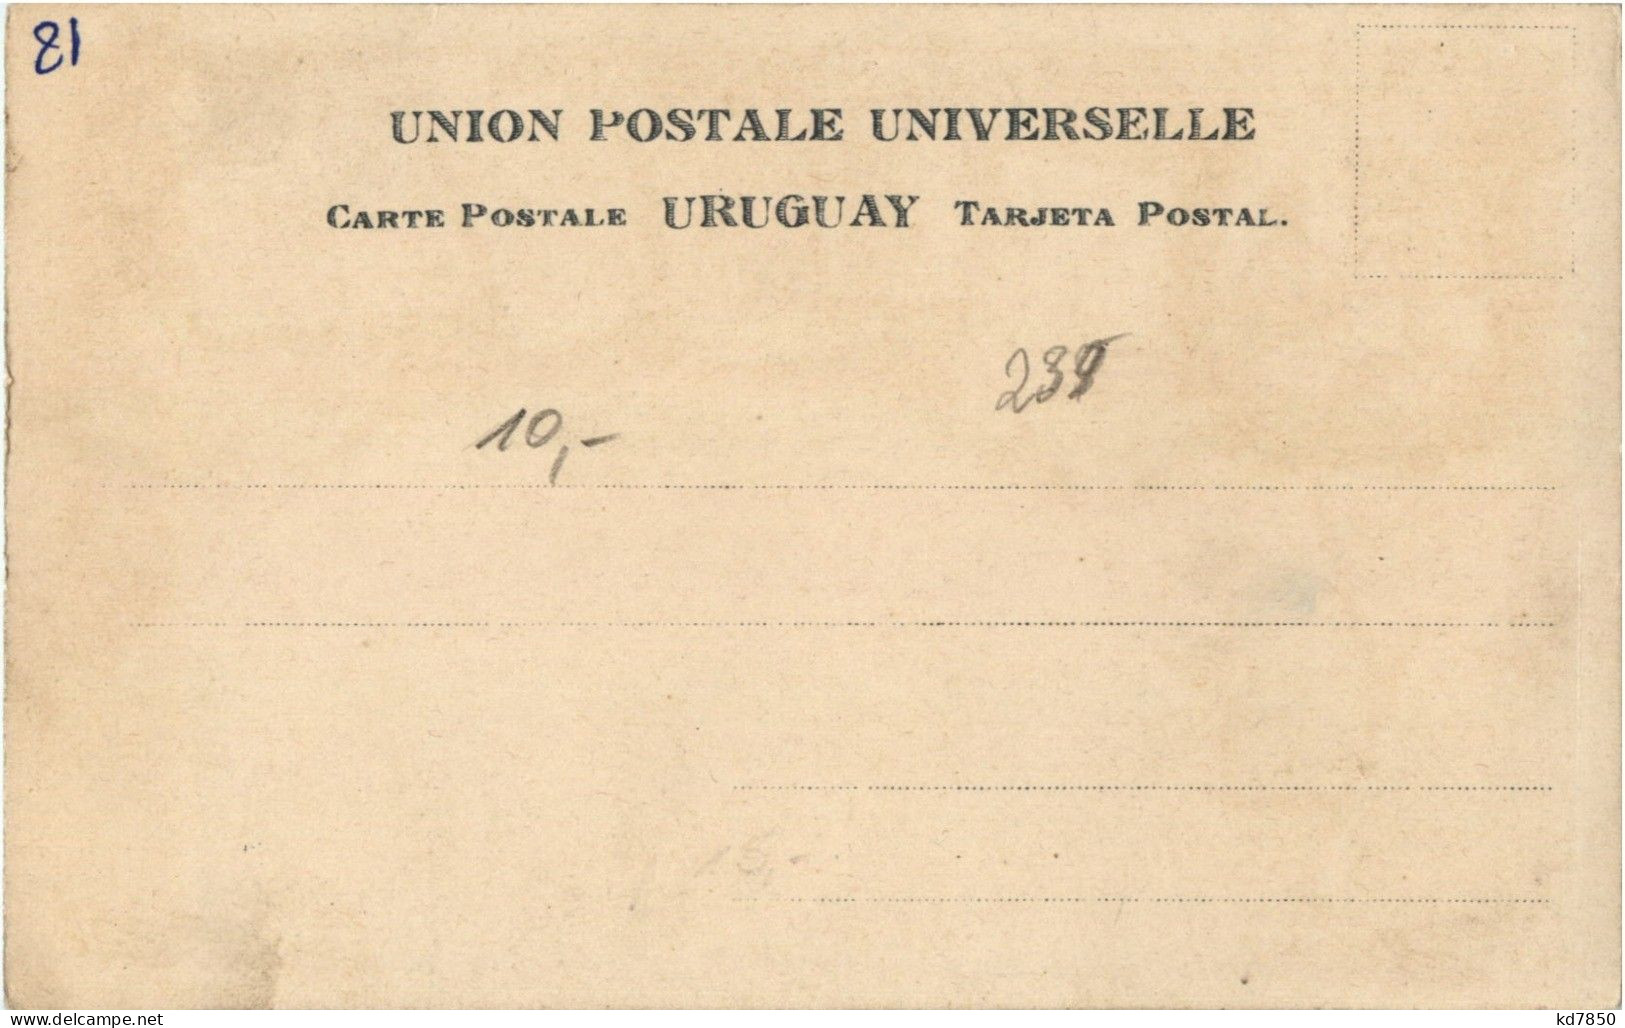 Uruquay - Briefmarken - Stamps - Prägekarte - Timbres (représentations)